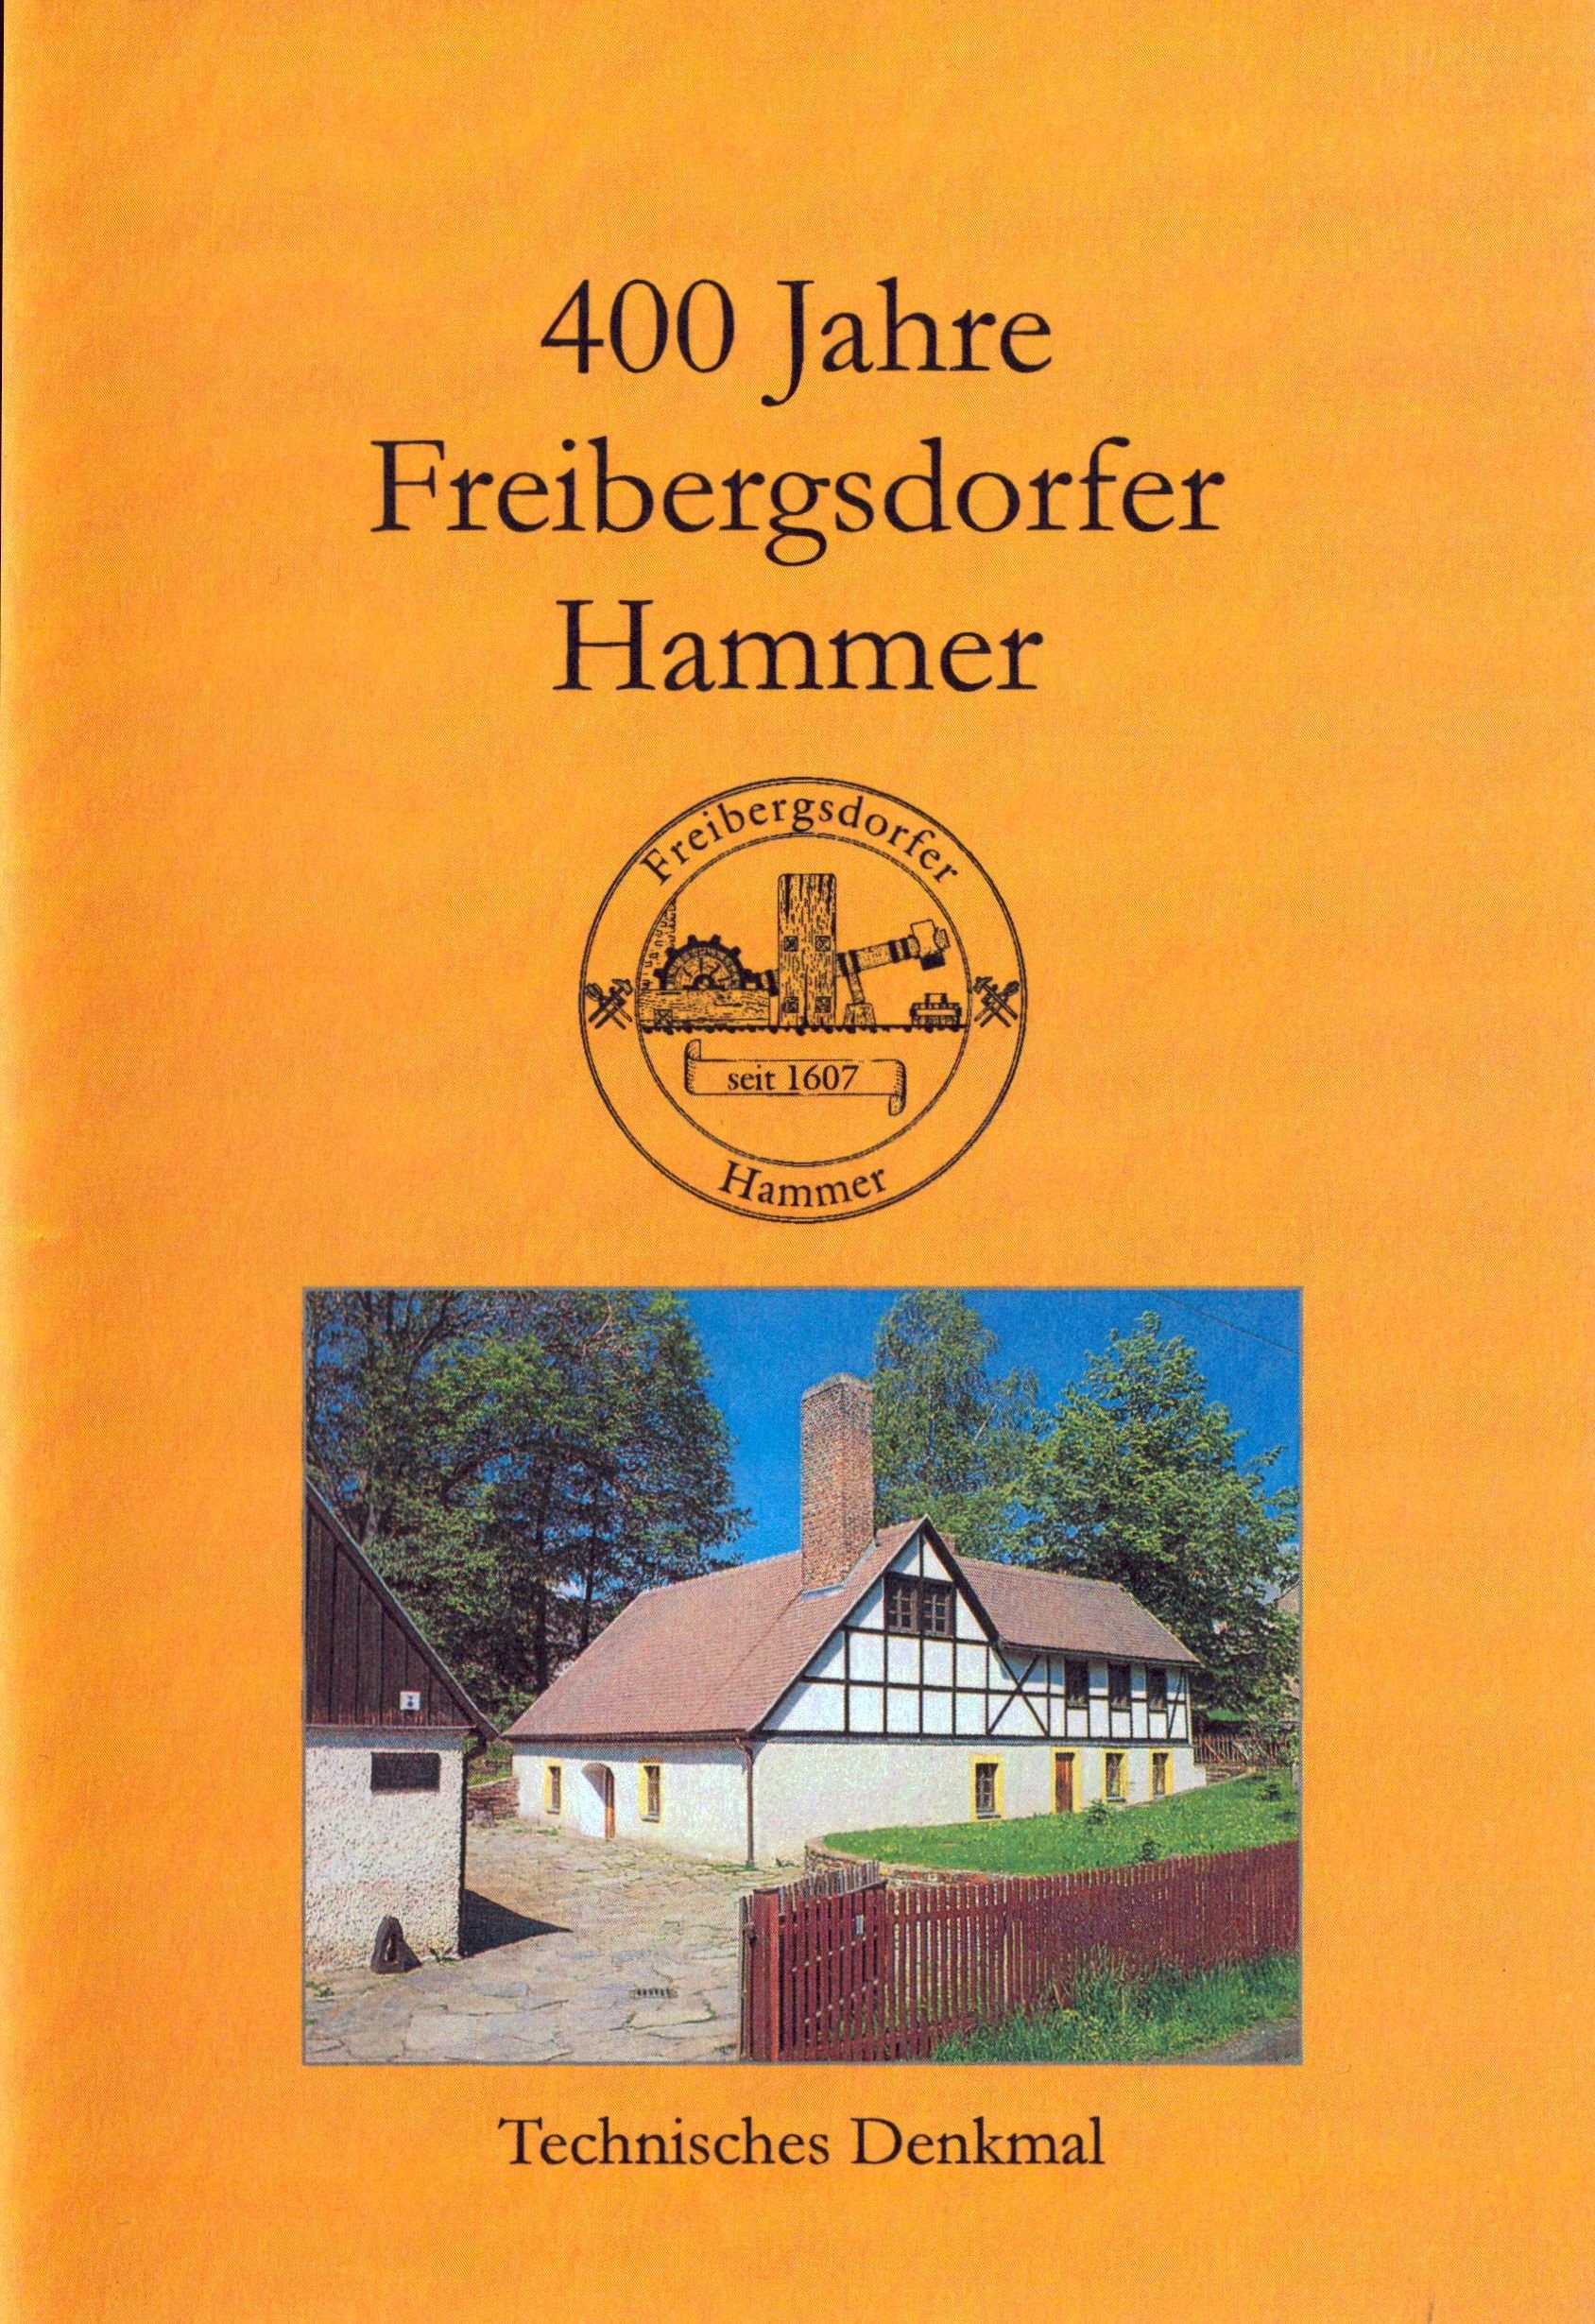 400 Jahre Freibergsdorfer Hammer (Archiv SAXONIA-FREIBERG-STIFTUNG CC BY-NC-SA)